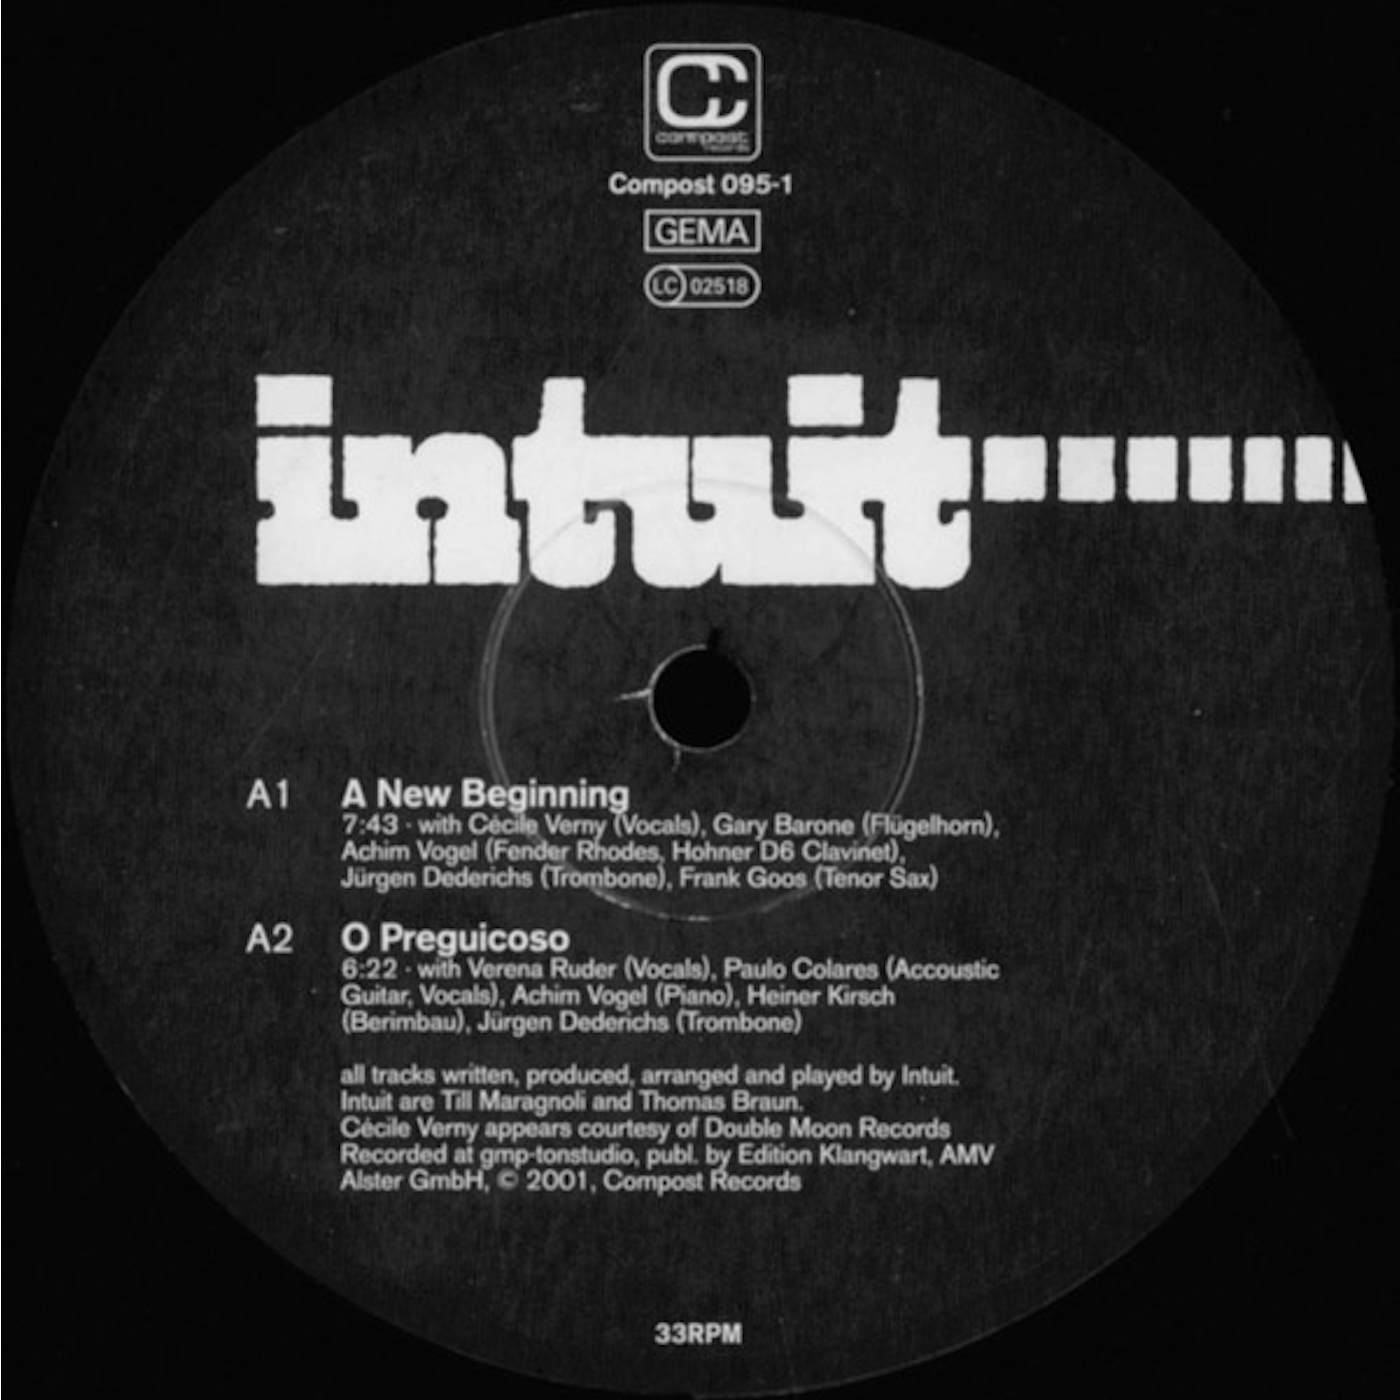 Intuit NEW BEGINNING Vinyl Record